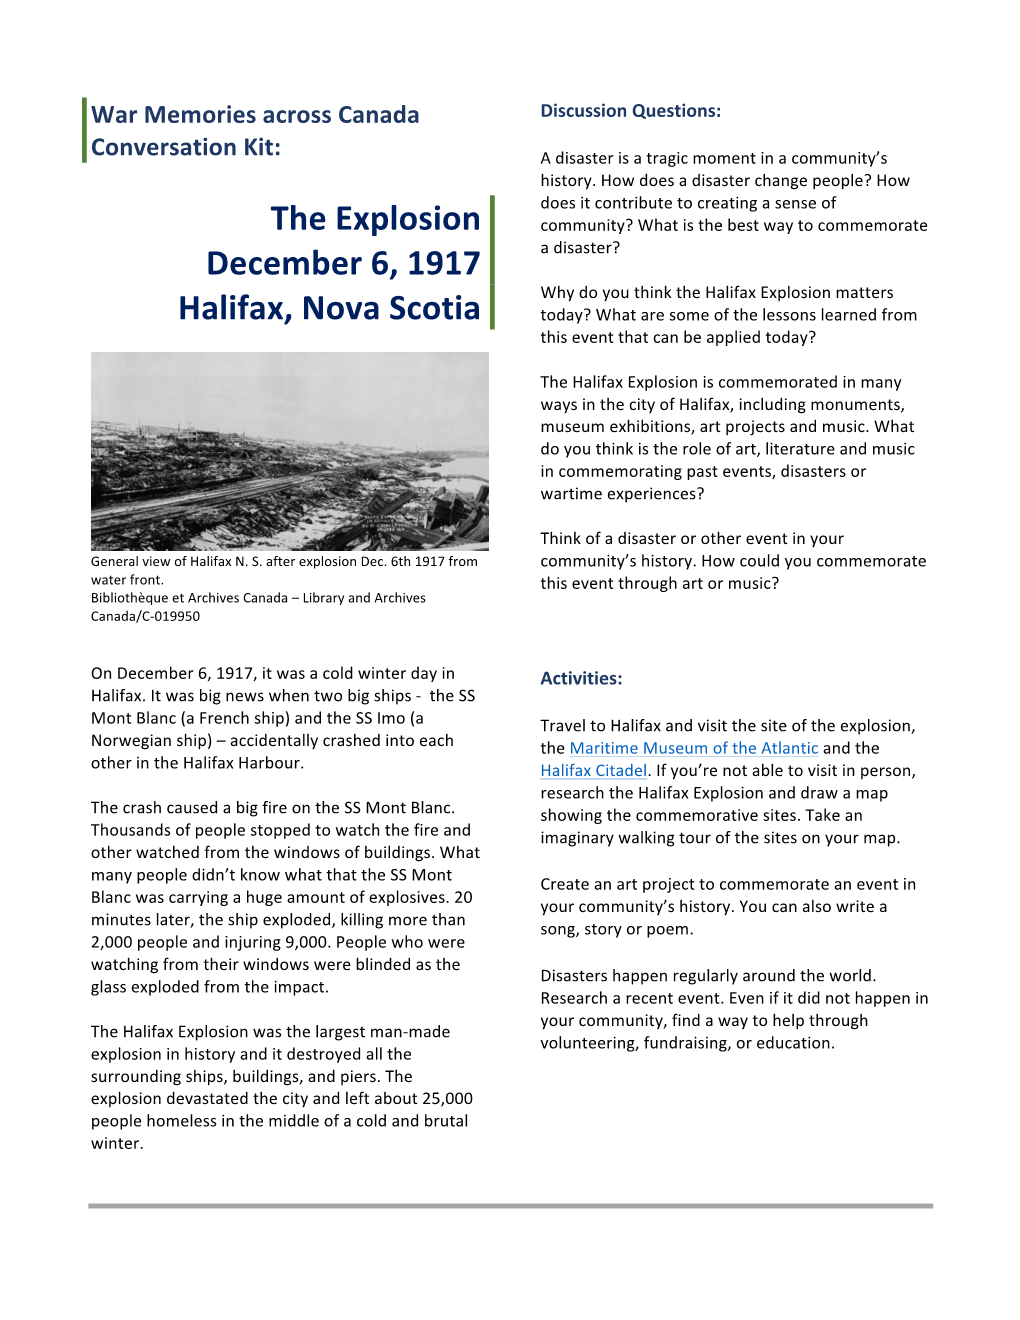 The Explosion December 6, 1917 Halifax, Nova Scotia